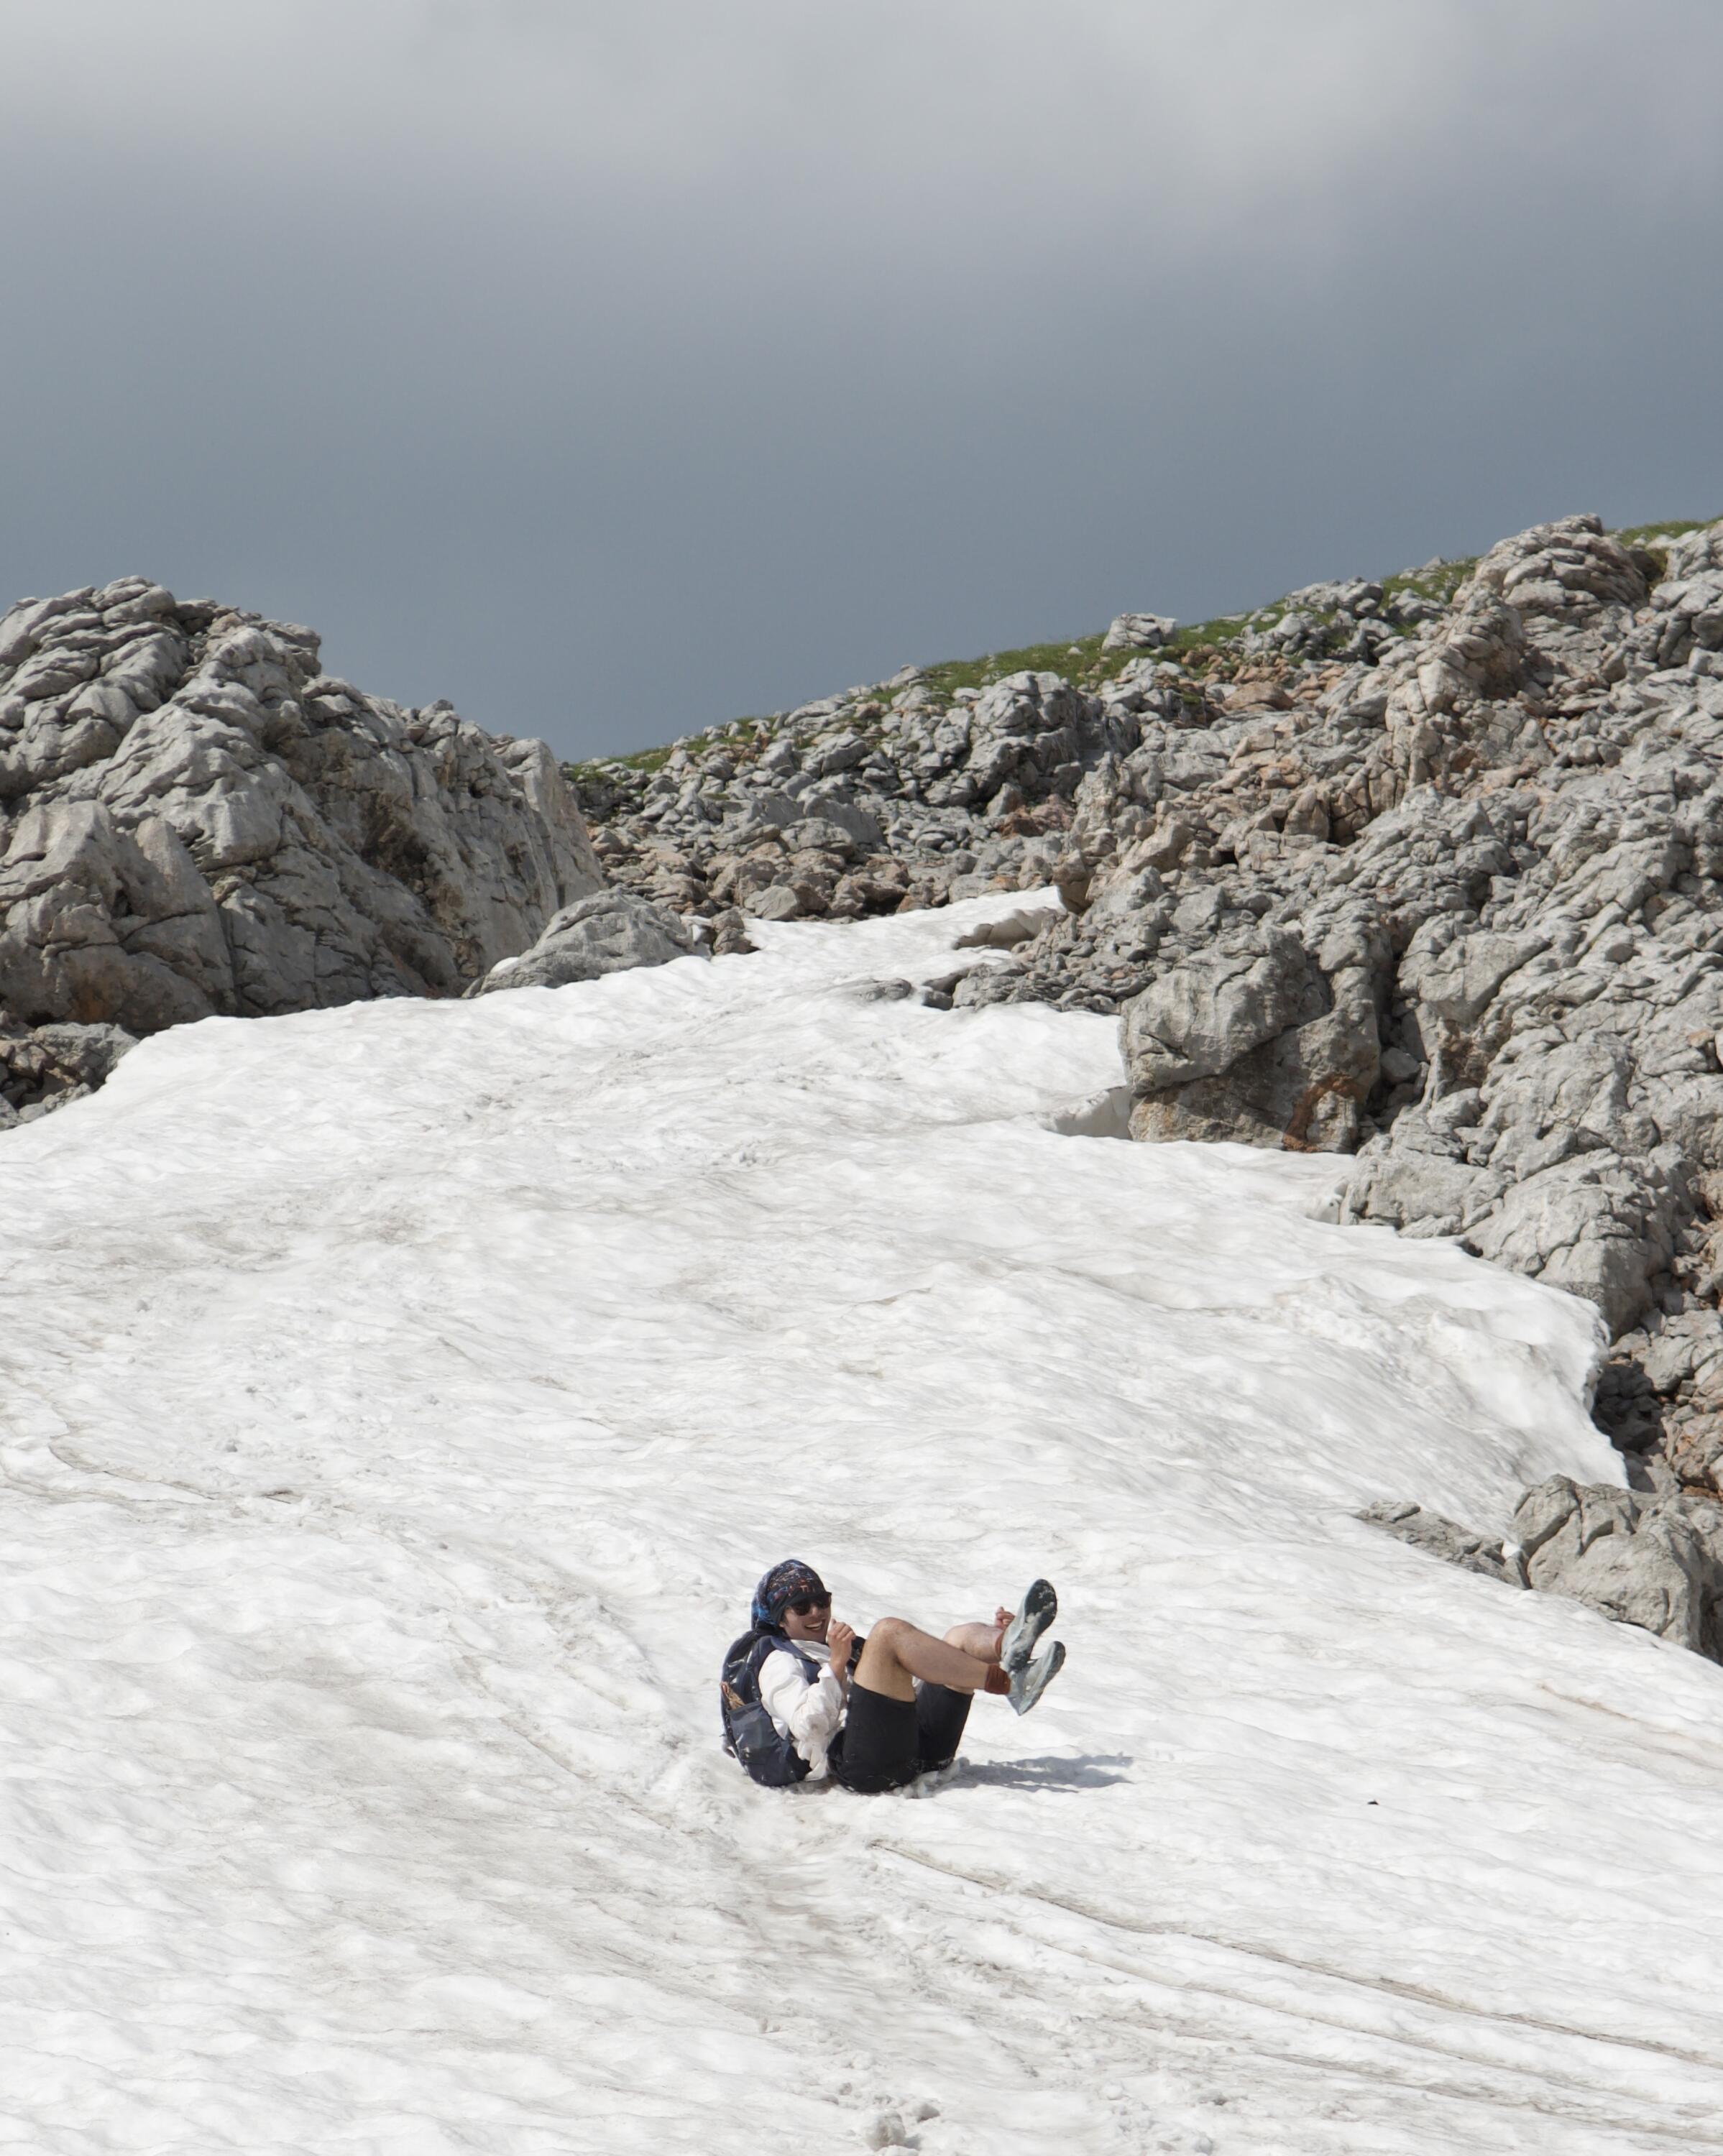 Ryan sliding down an icy mountain.